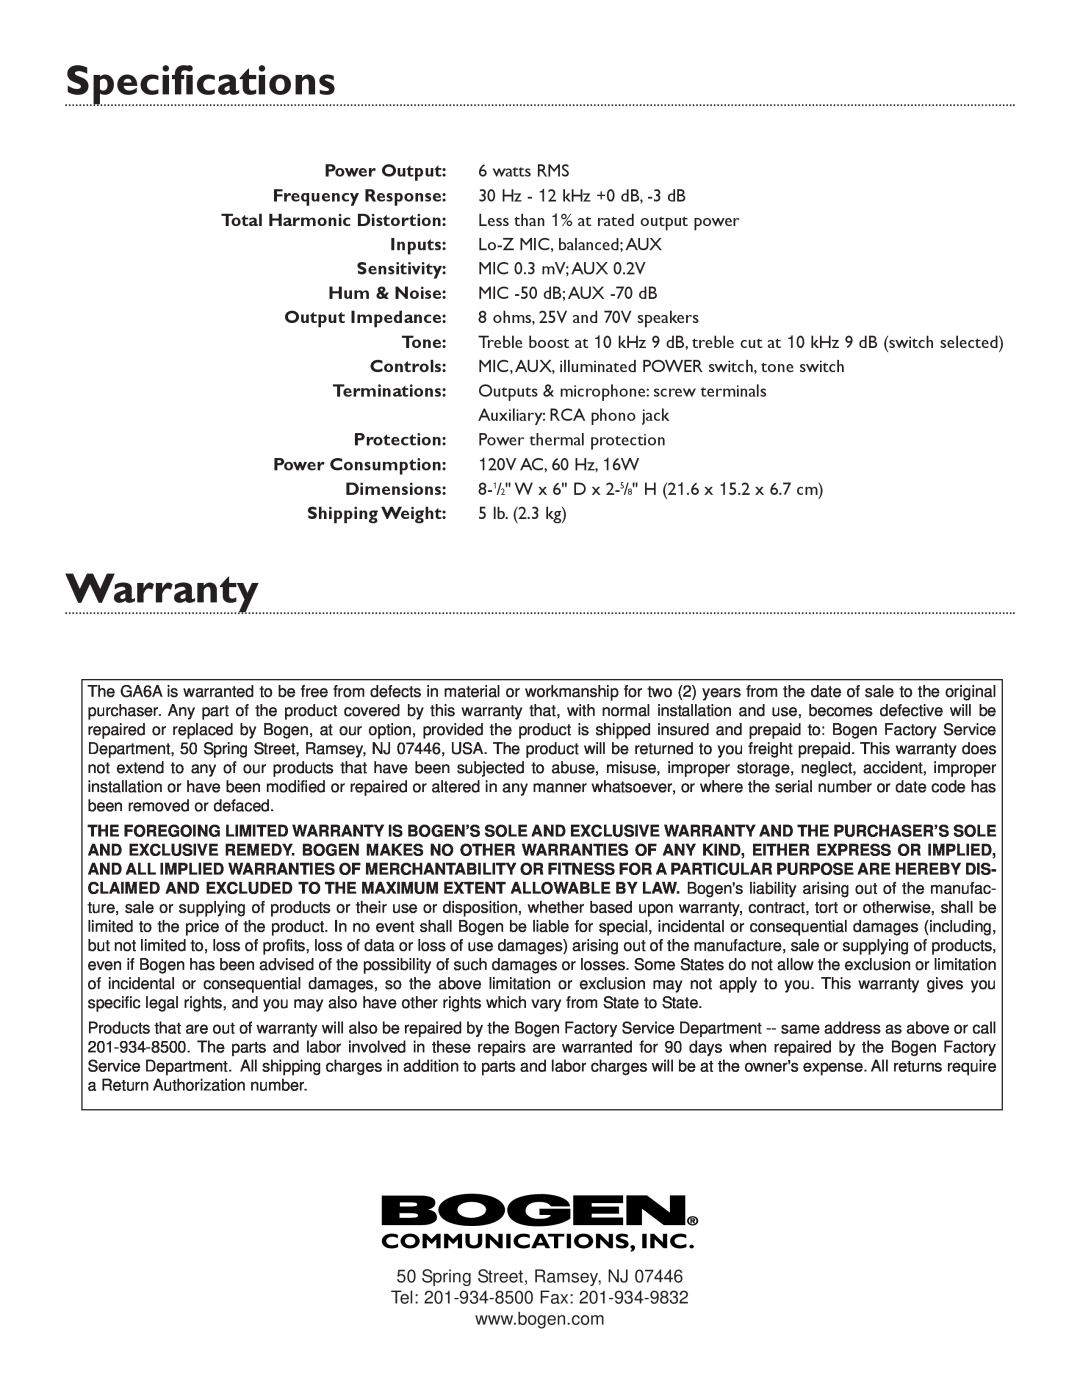 Bogen GA6A specifications Specifications, Spring Street, Ramsey, NJ, Warranty 